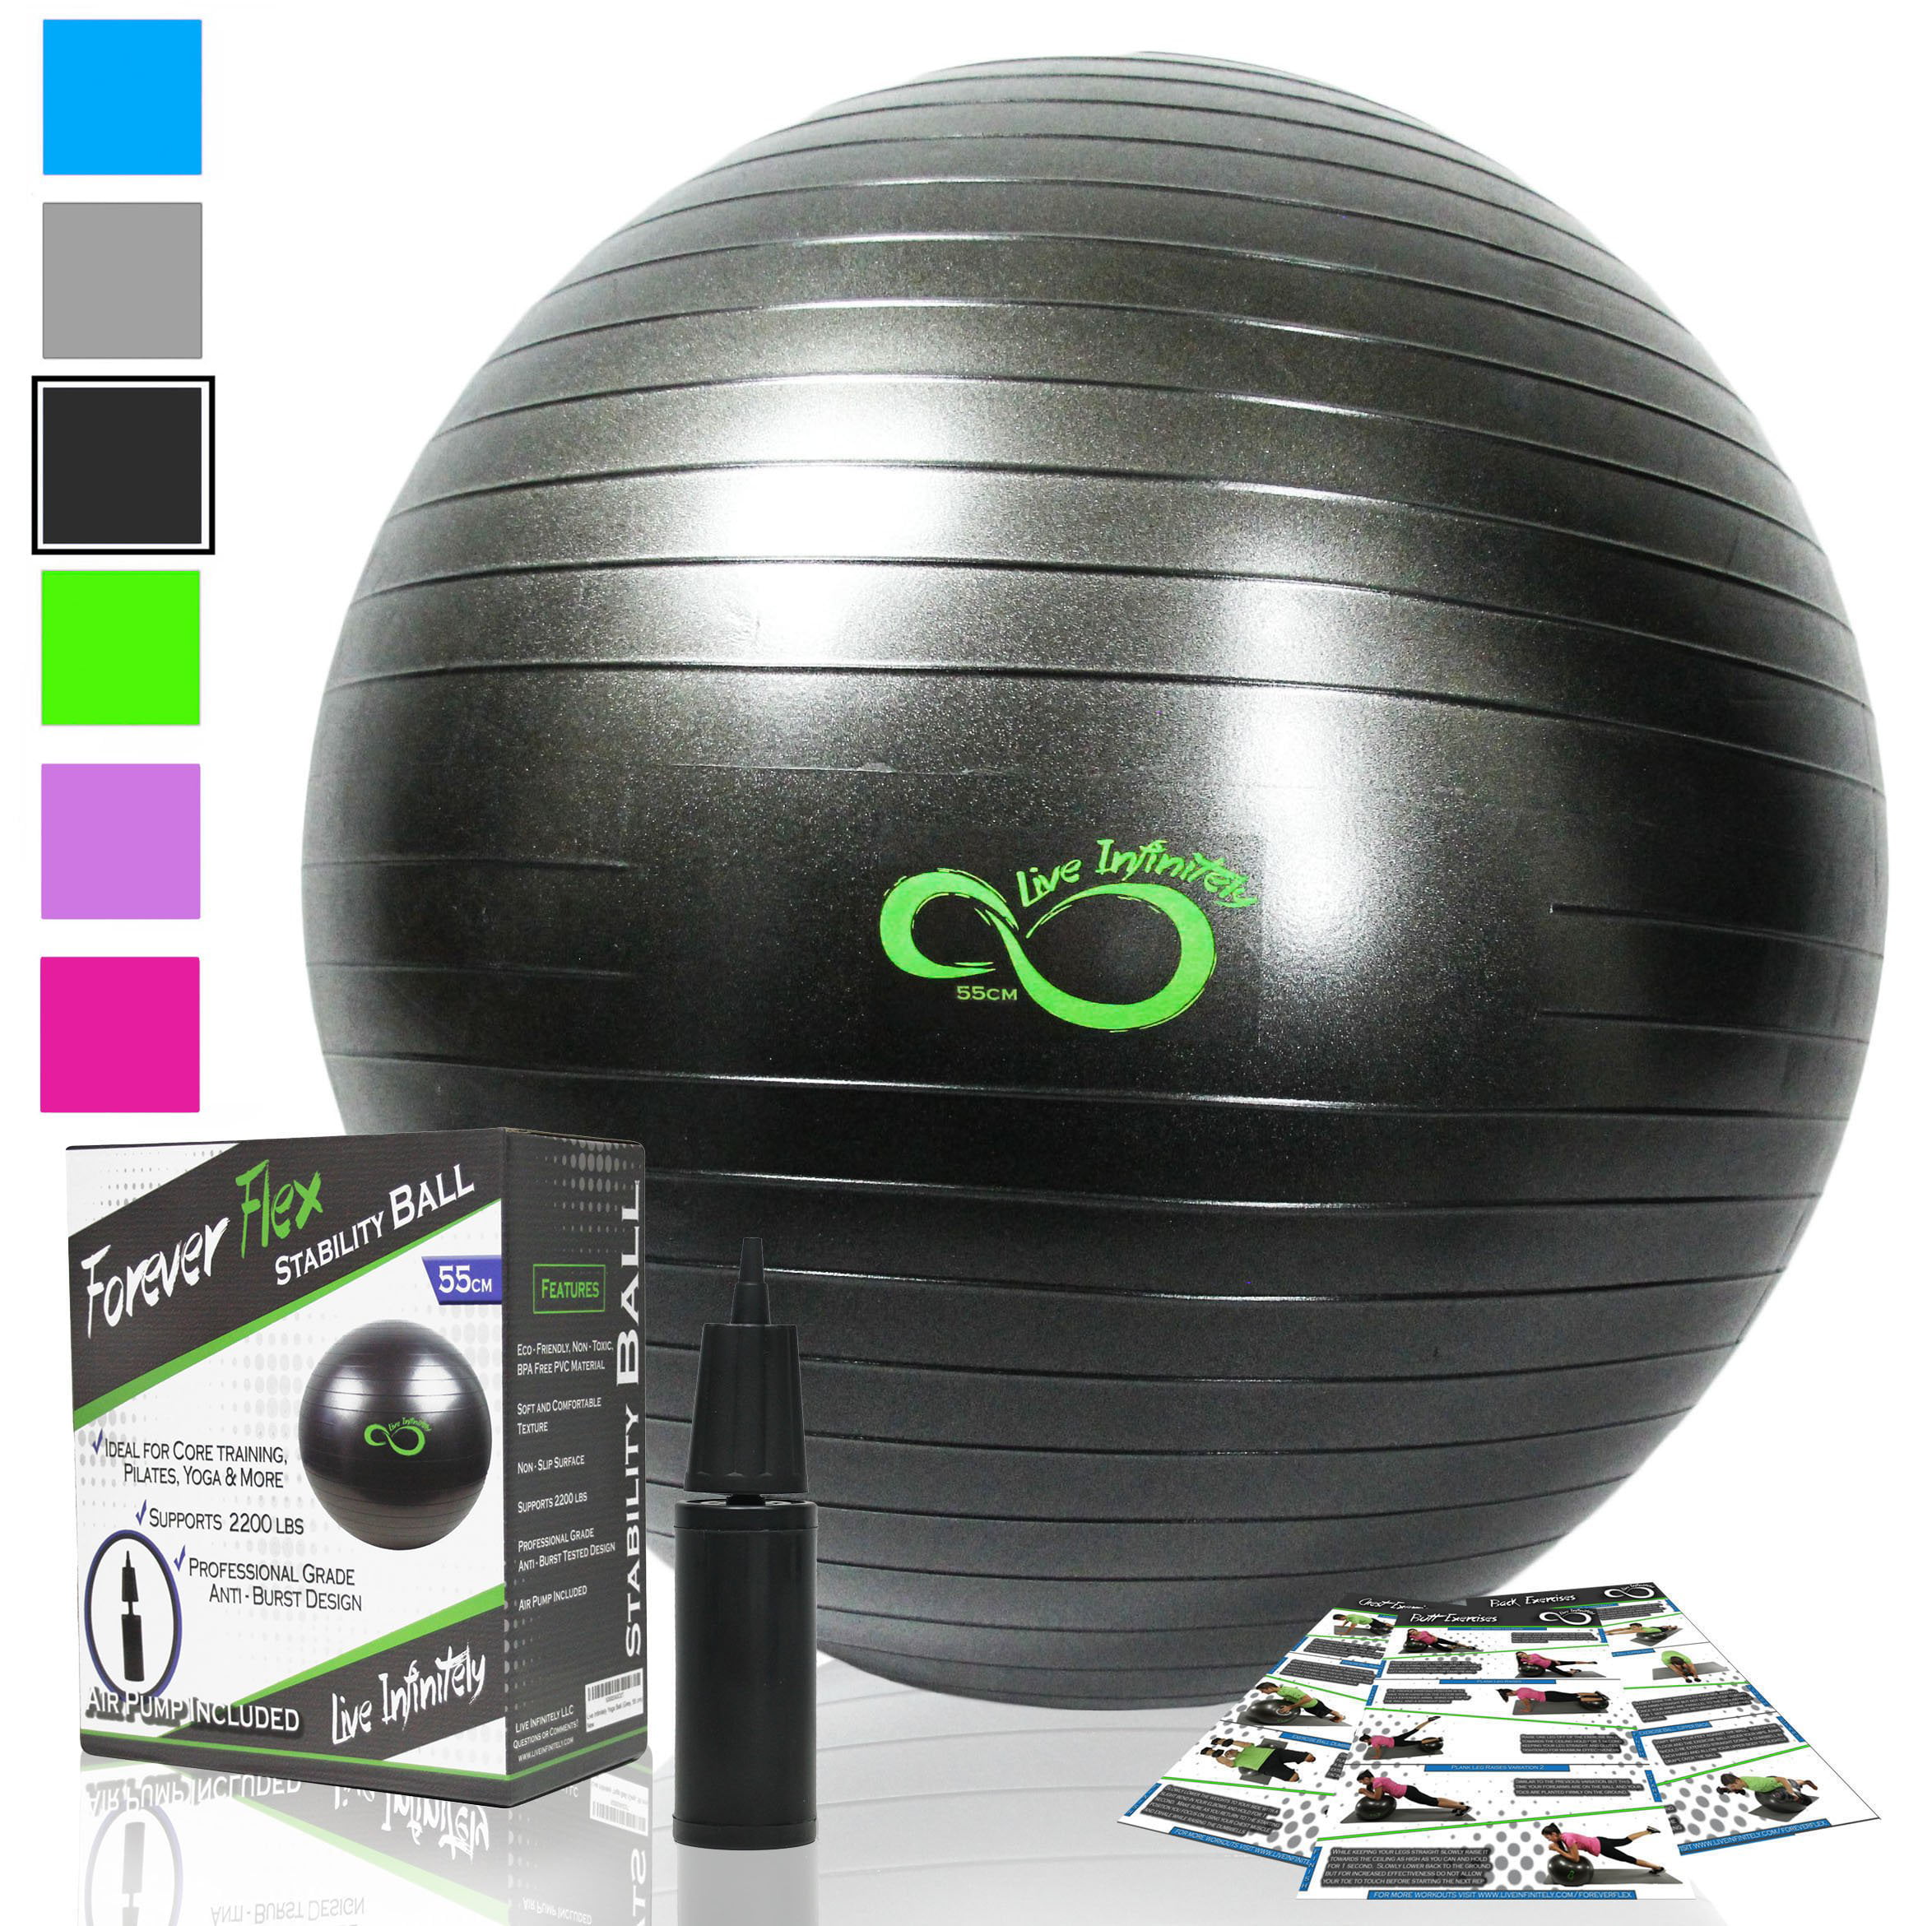 travel exercise ball